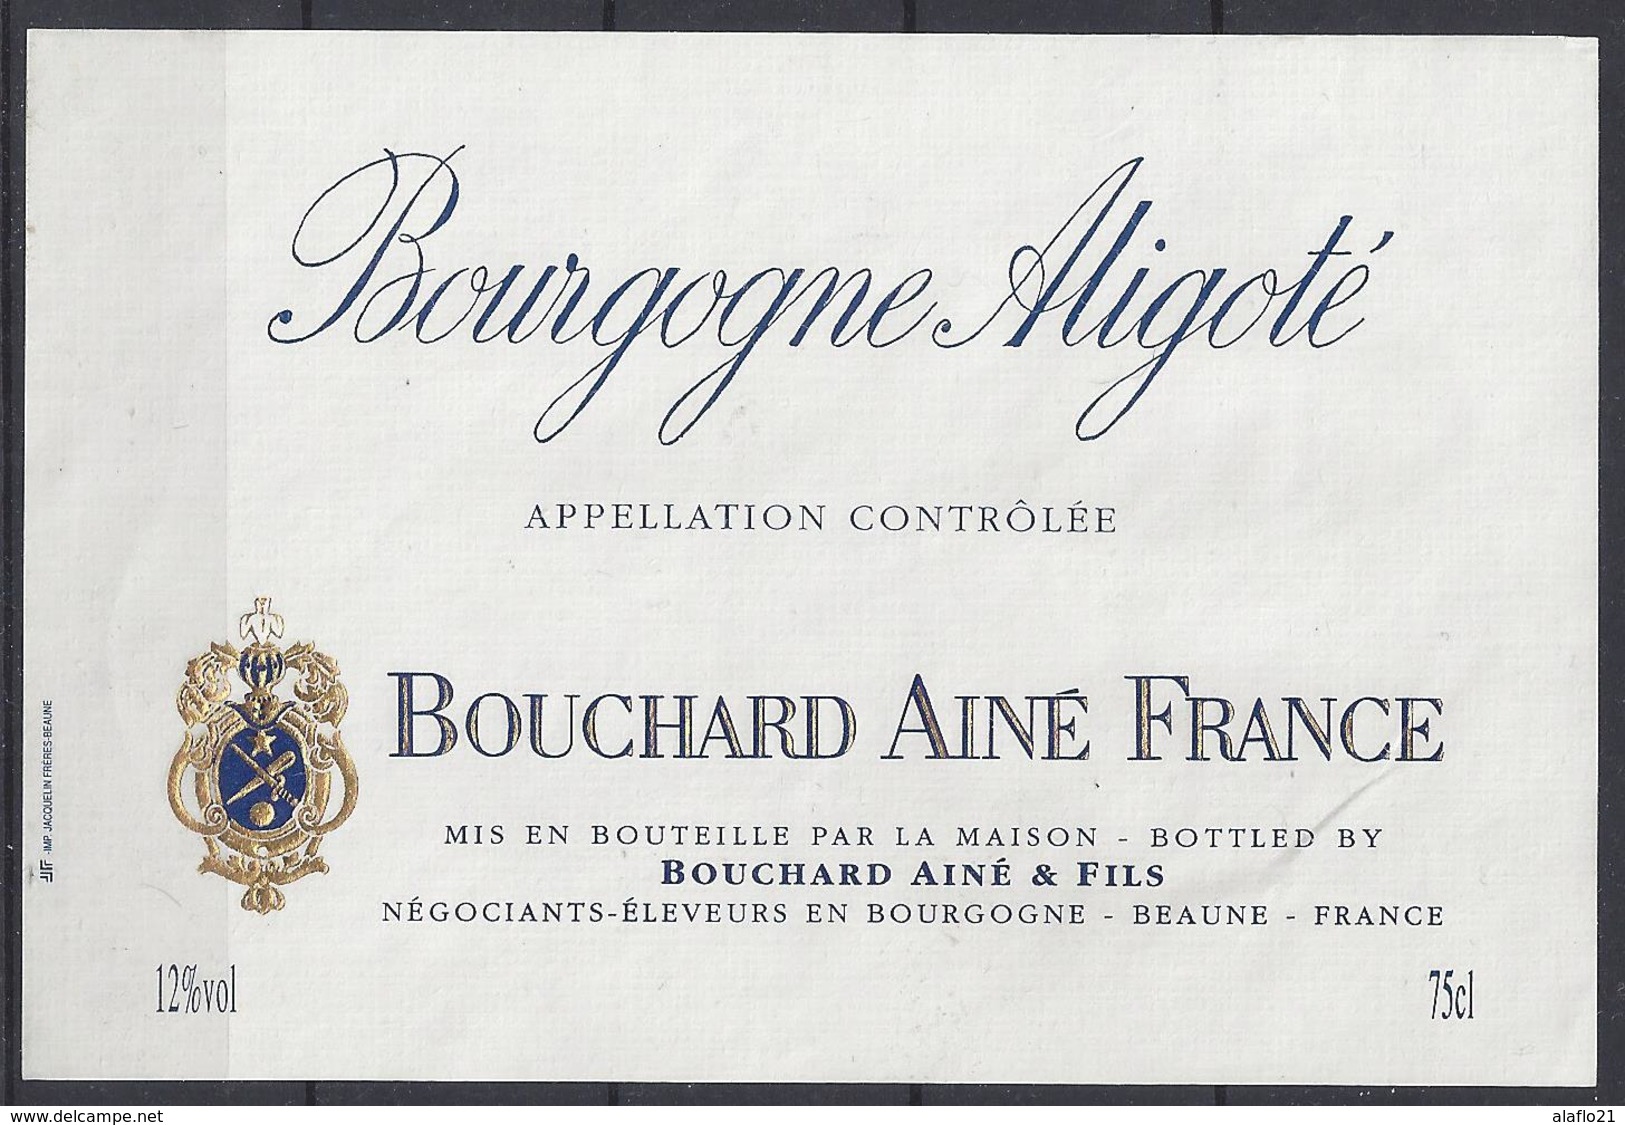 ETIQUETTE BOURGOGNE ALIGOTE - Bouchard Ainé à Beaune - Bourgogne